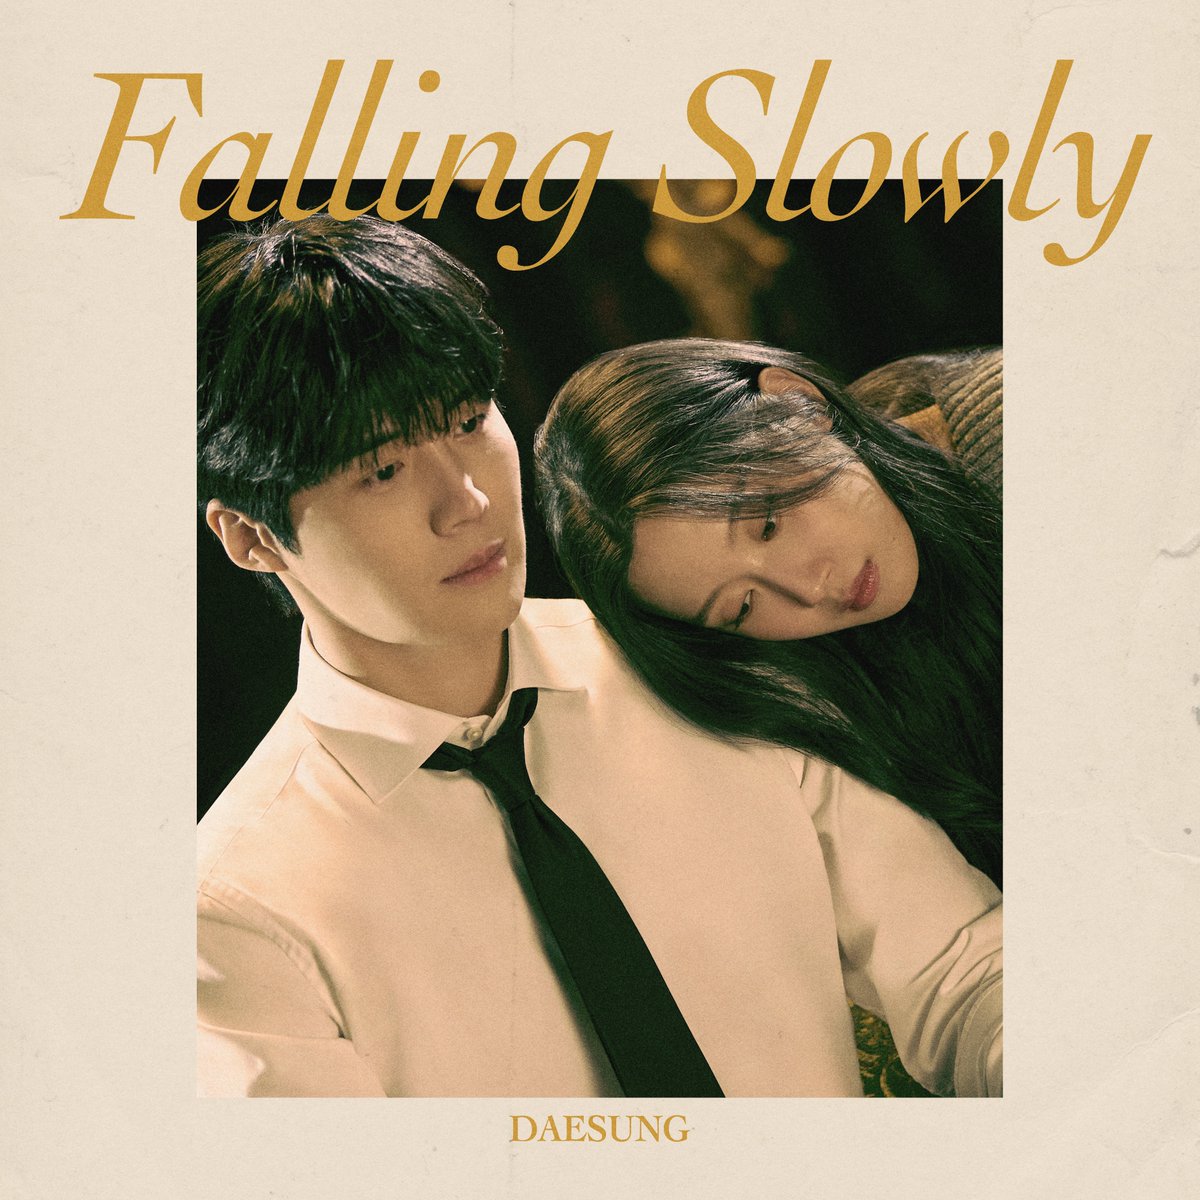 [💿] DAESUNG 'Falling Slowly'가 전 음원사이트에 공개되었습니다. ⠀ ▶lnk.to/FallingSlowly ⠀ #대성 #DAESUNG #DLITE #FallingSlowly #빛 #Light #DLable